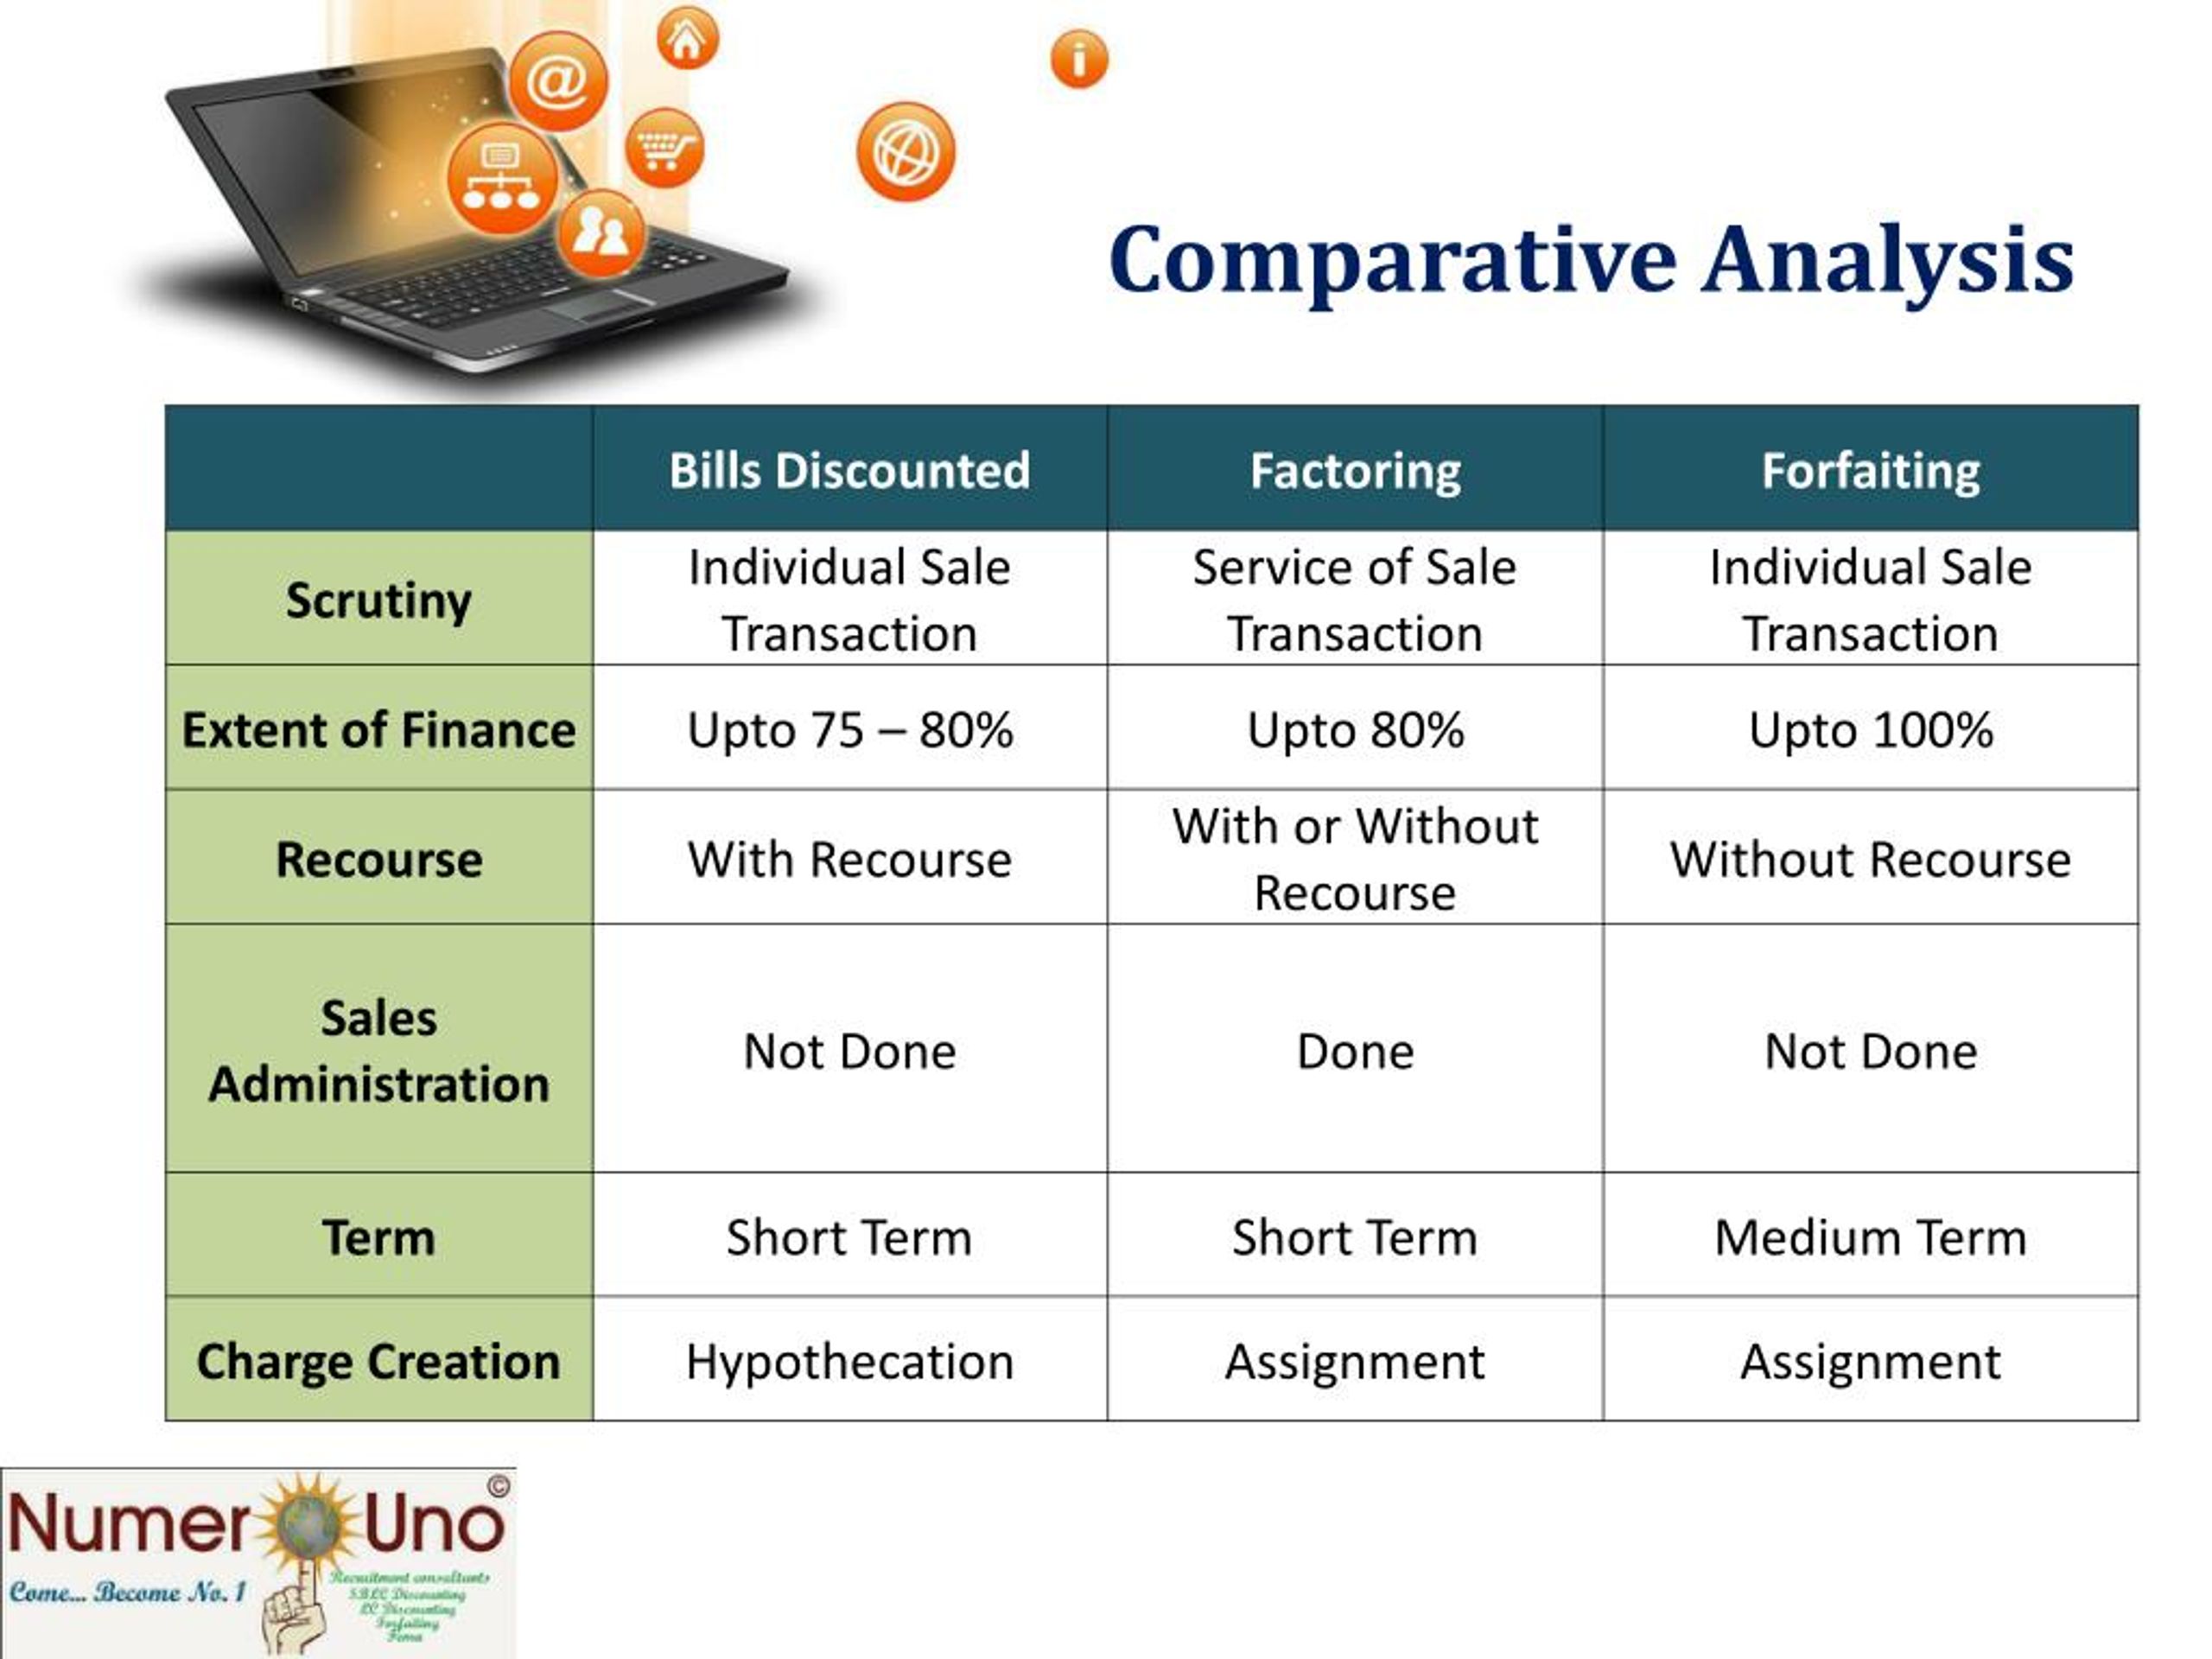 Comparative Analysis. Data comparison